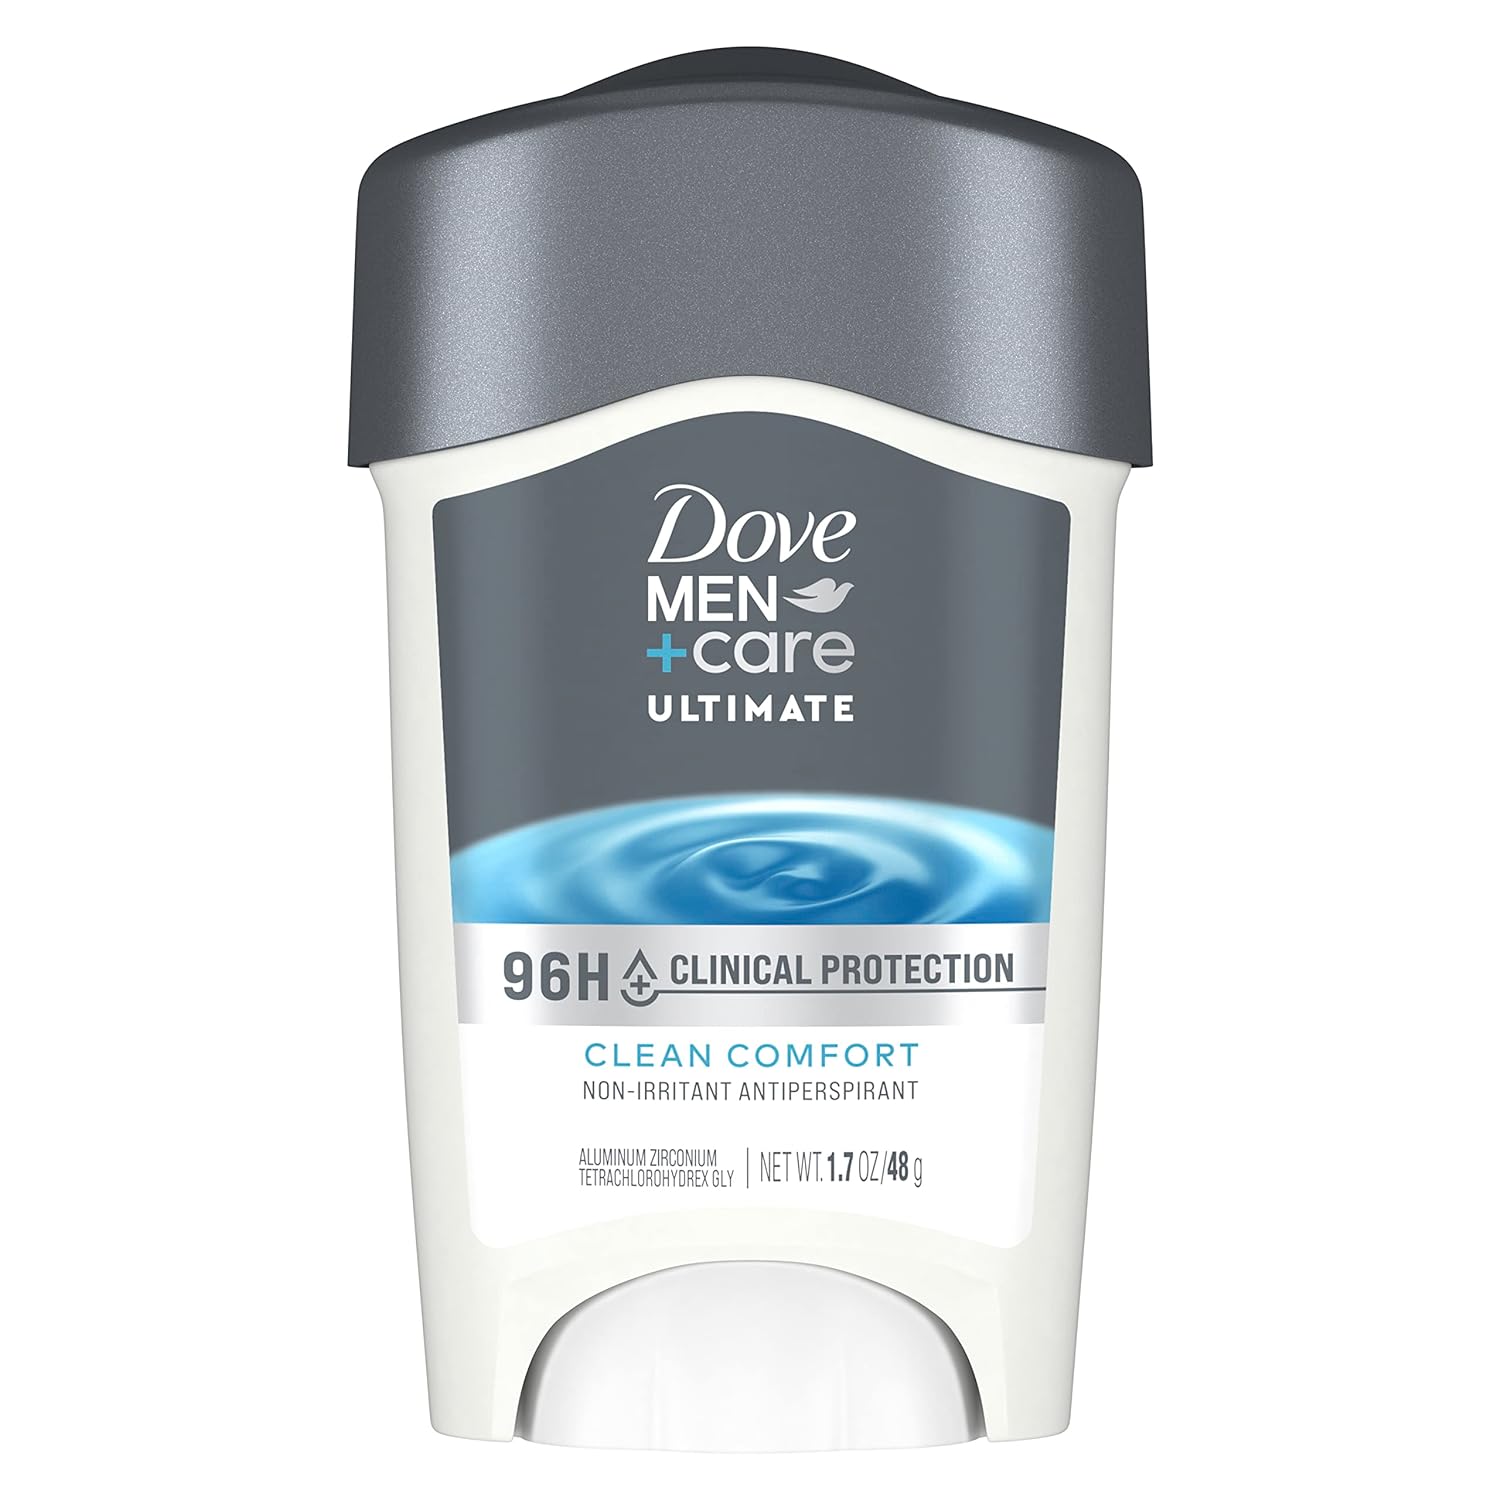 Dove Men+Care Clinical Protection Antiperspirant Deodorant, Clean Comfort 1.7 oz